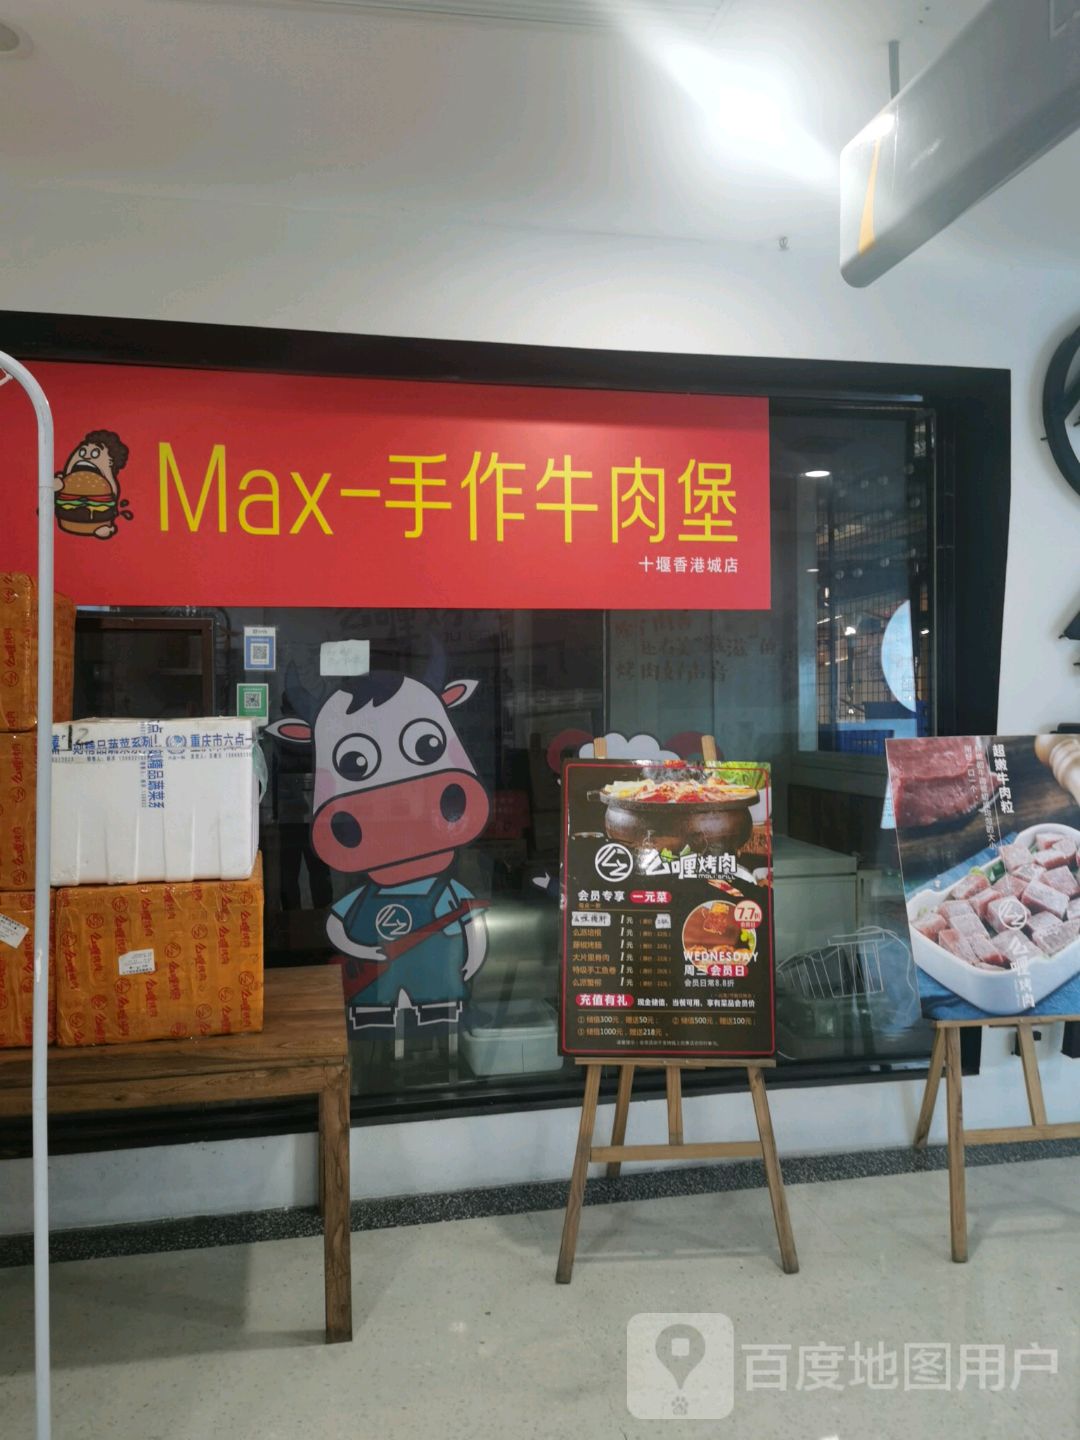 Max-手作卤肉煲(十堰香港城店)